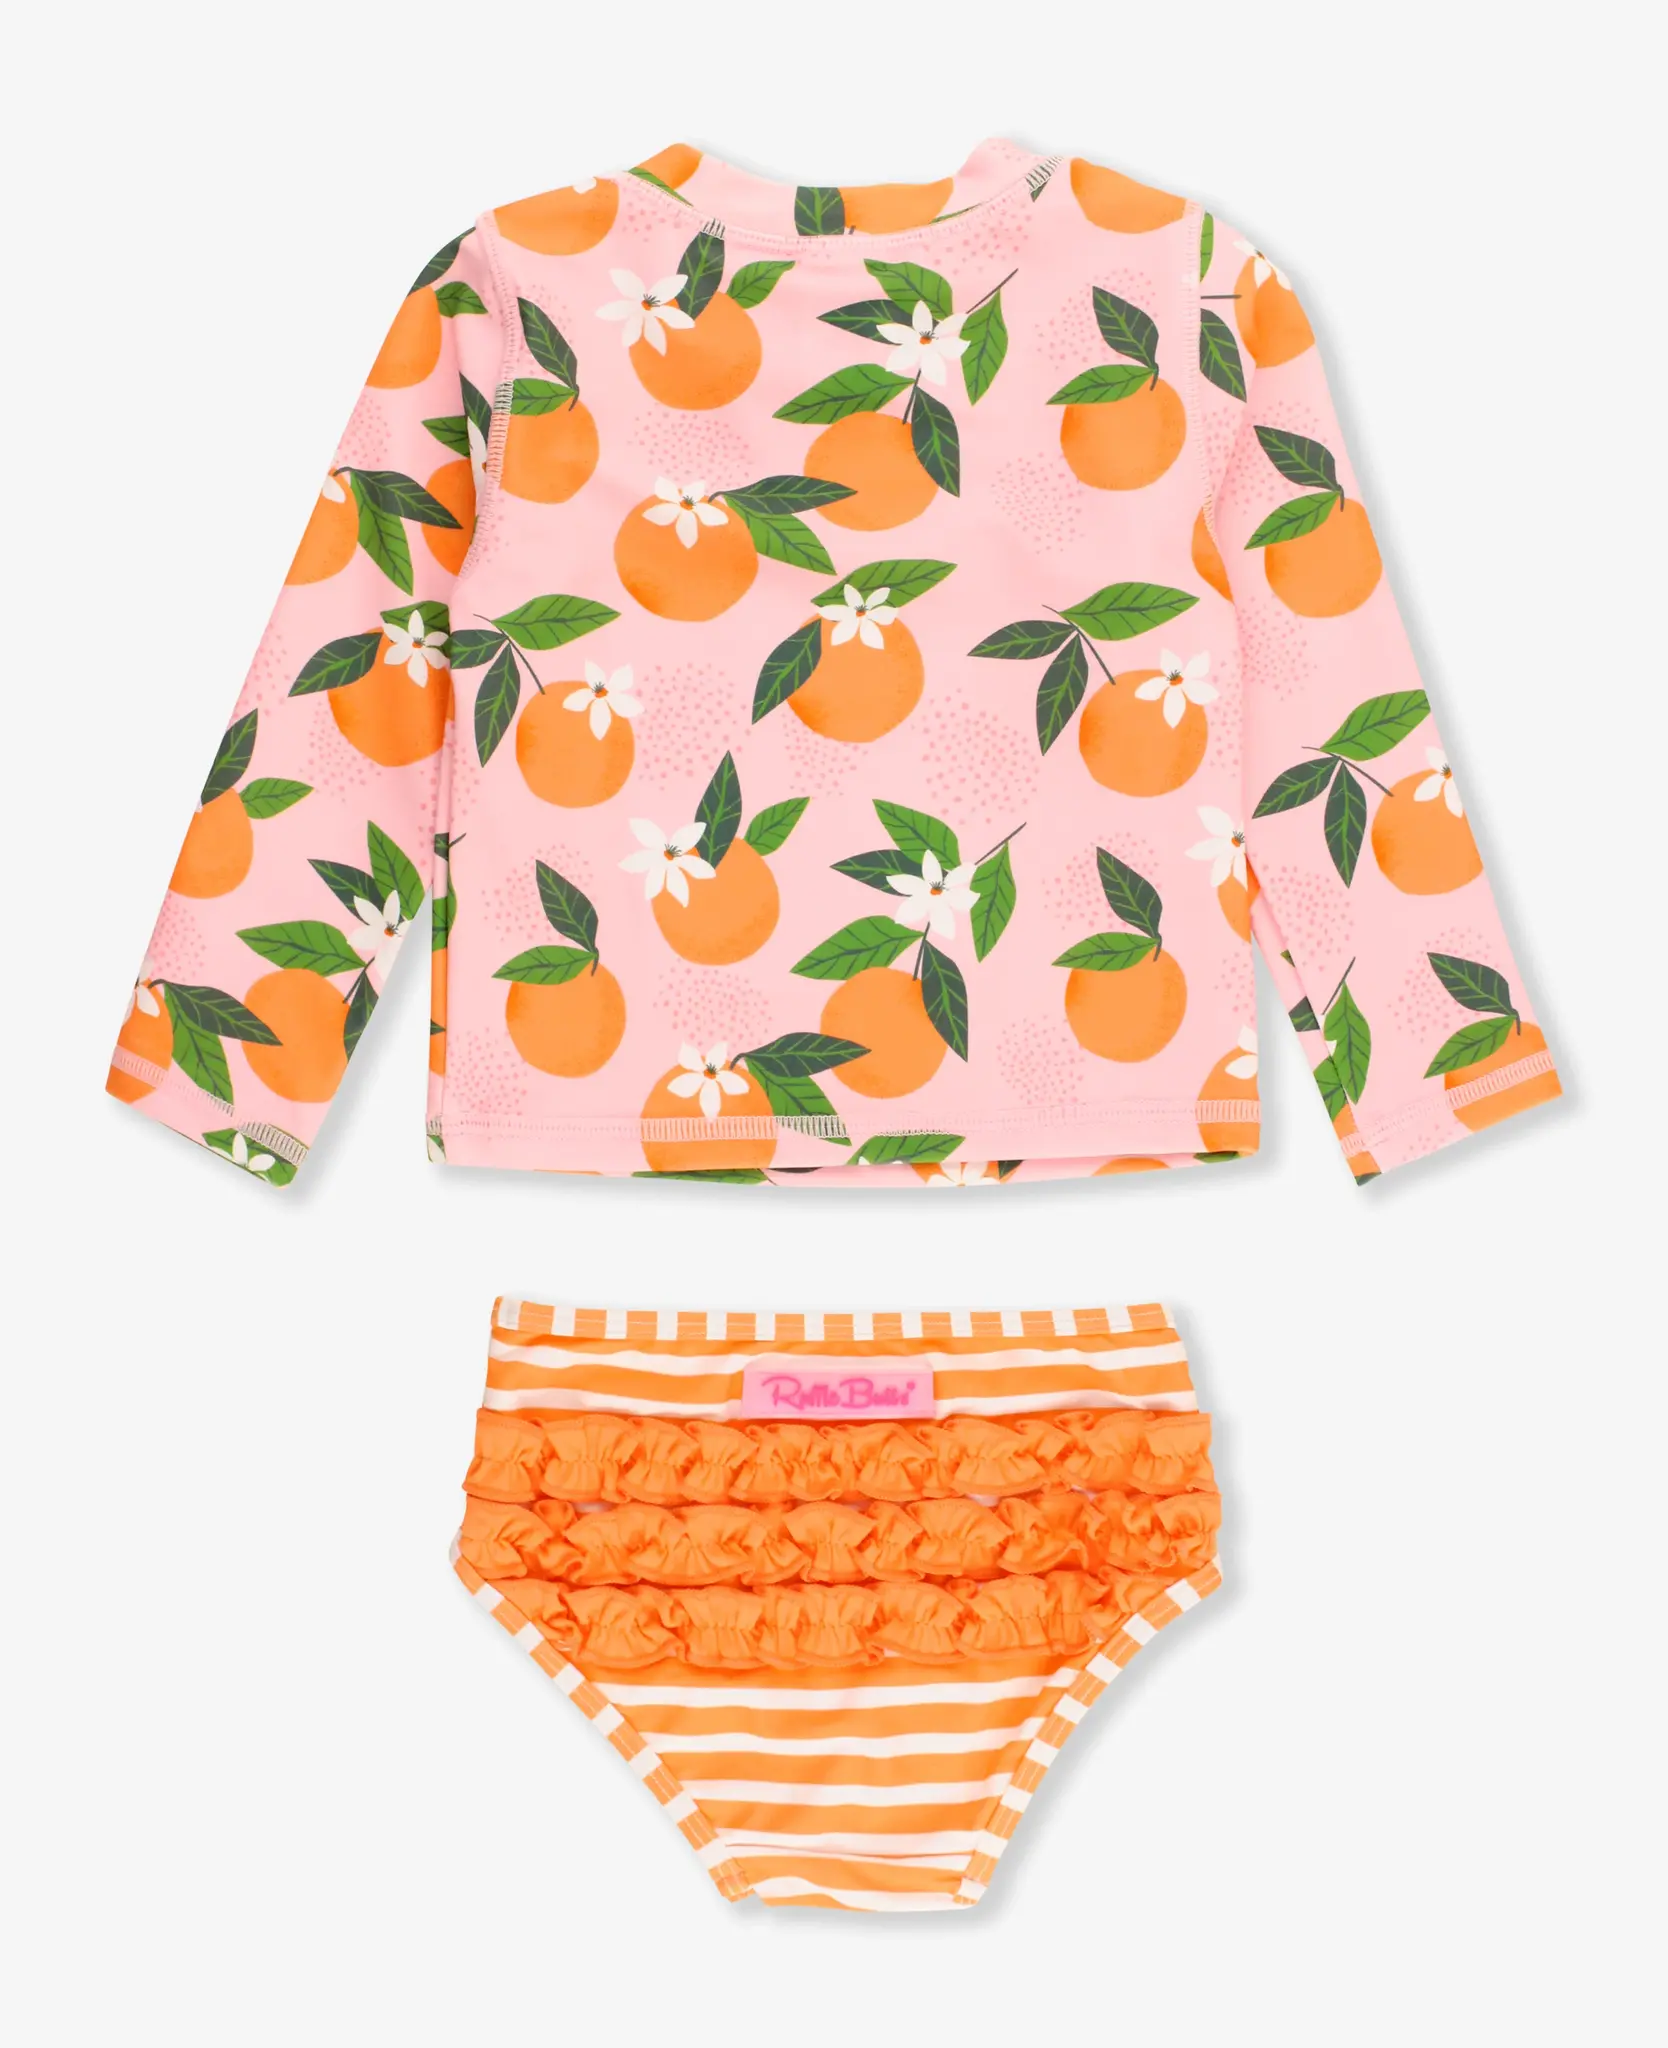 Ruffle Butts/Rugged Butts LS Zipper Rash Guard 2PC Swimsuit Orange You the Sweetest